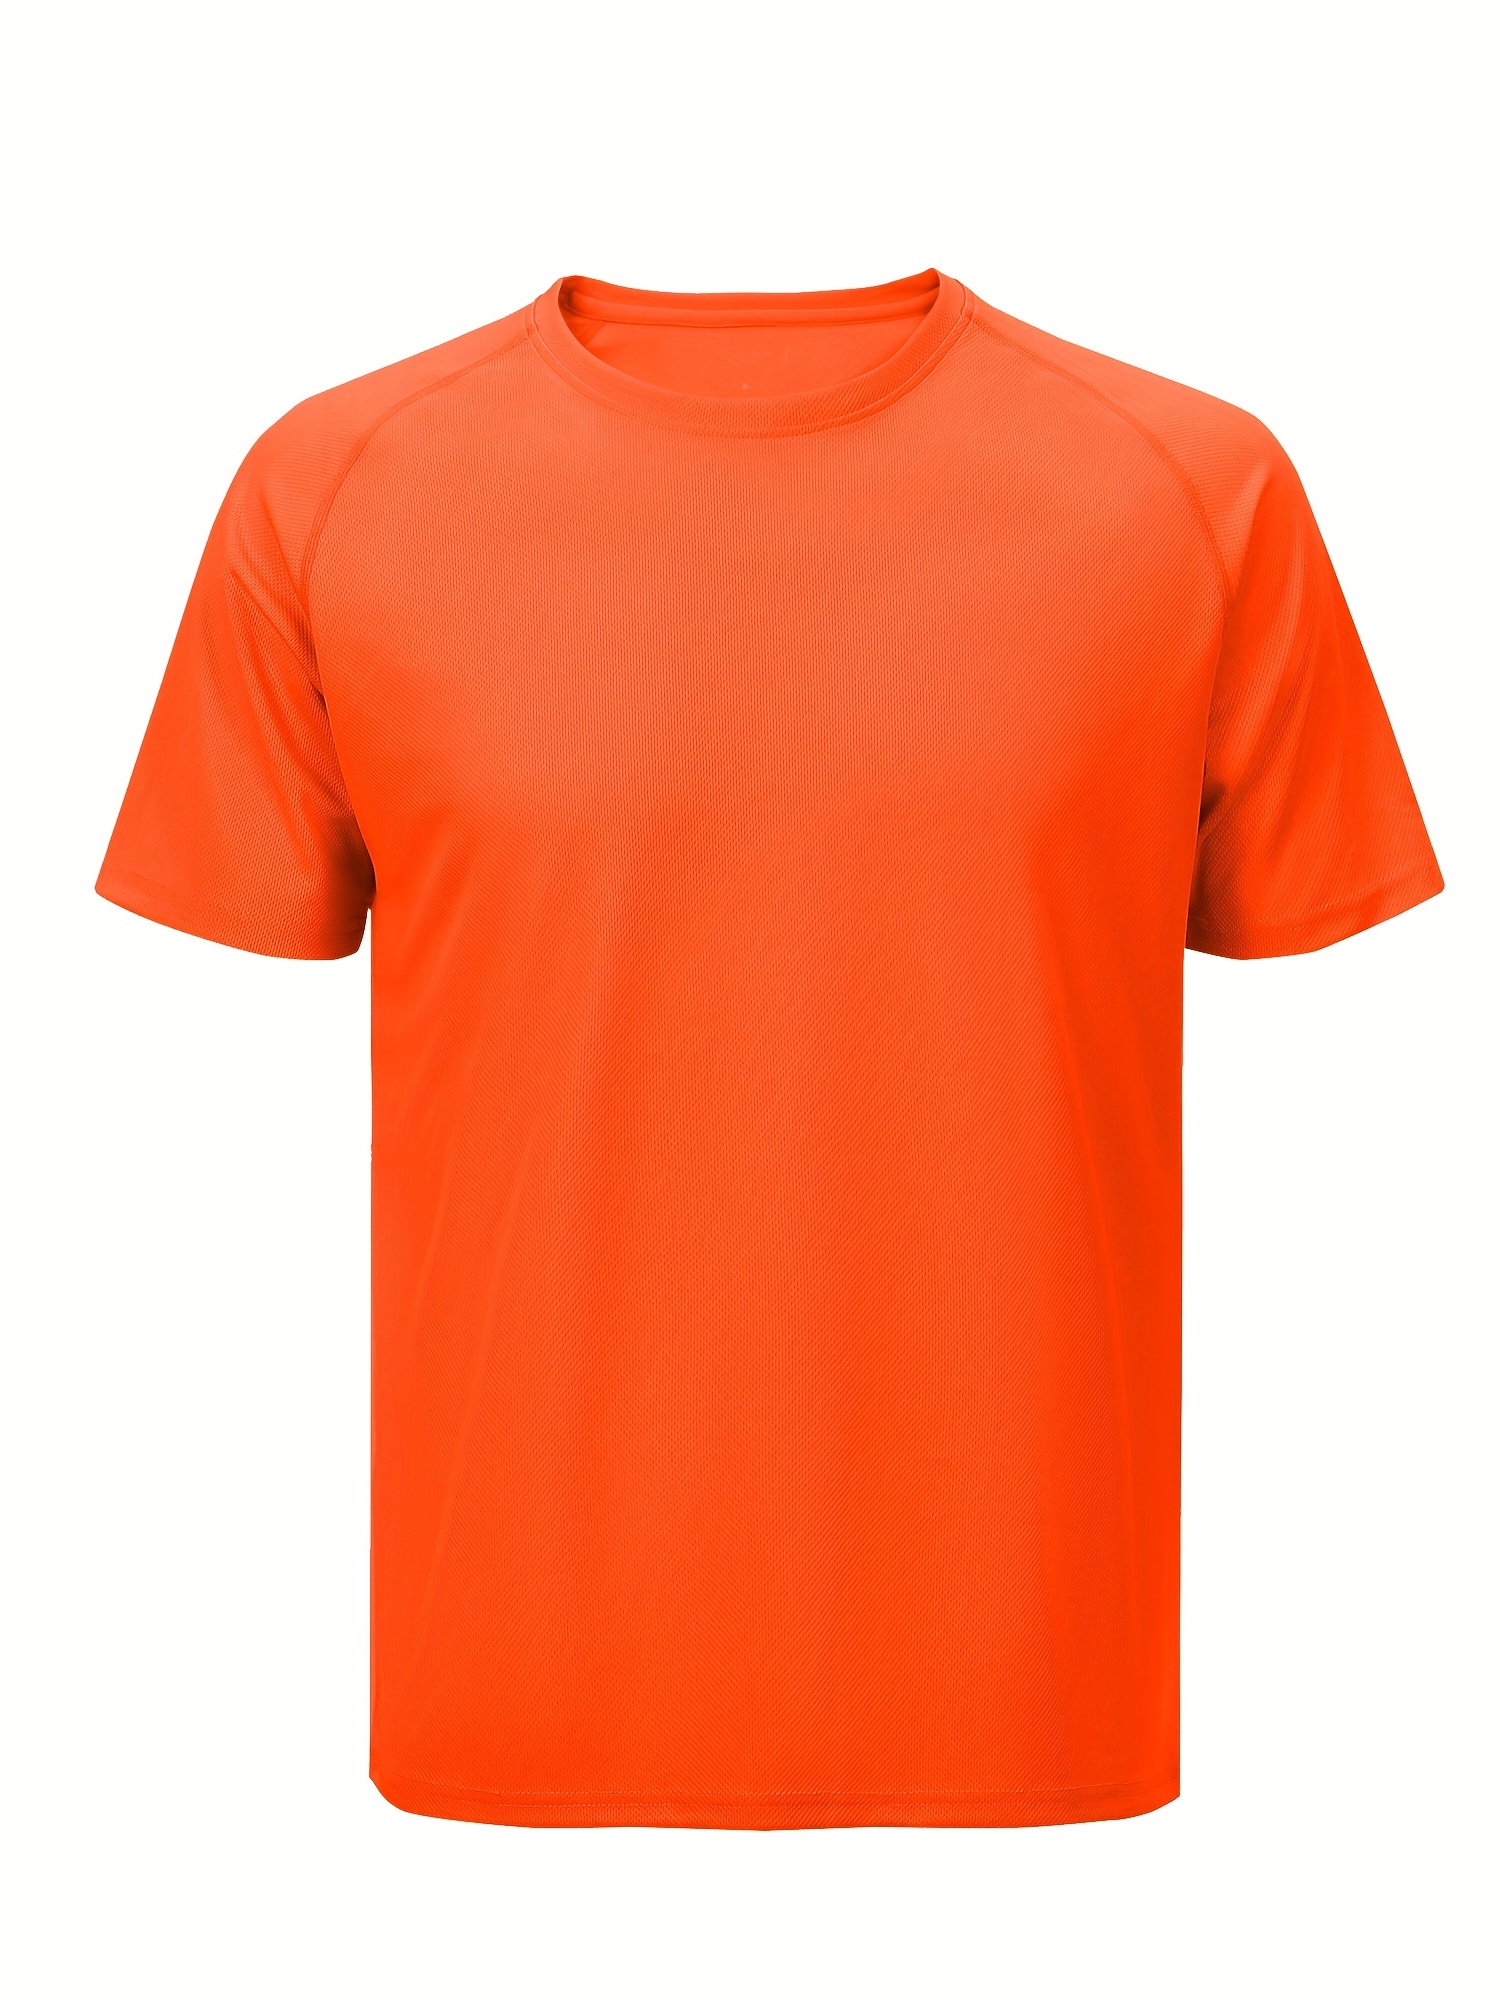 Orange Theory Fitness.Com Men's Short Sleeve Workout T Shirt S Small Orange